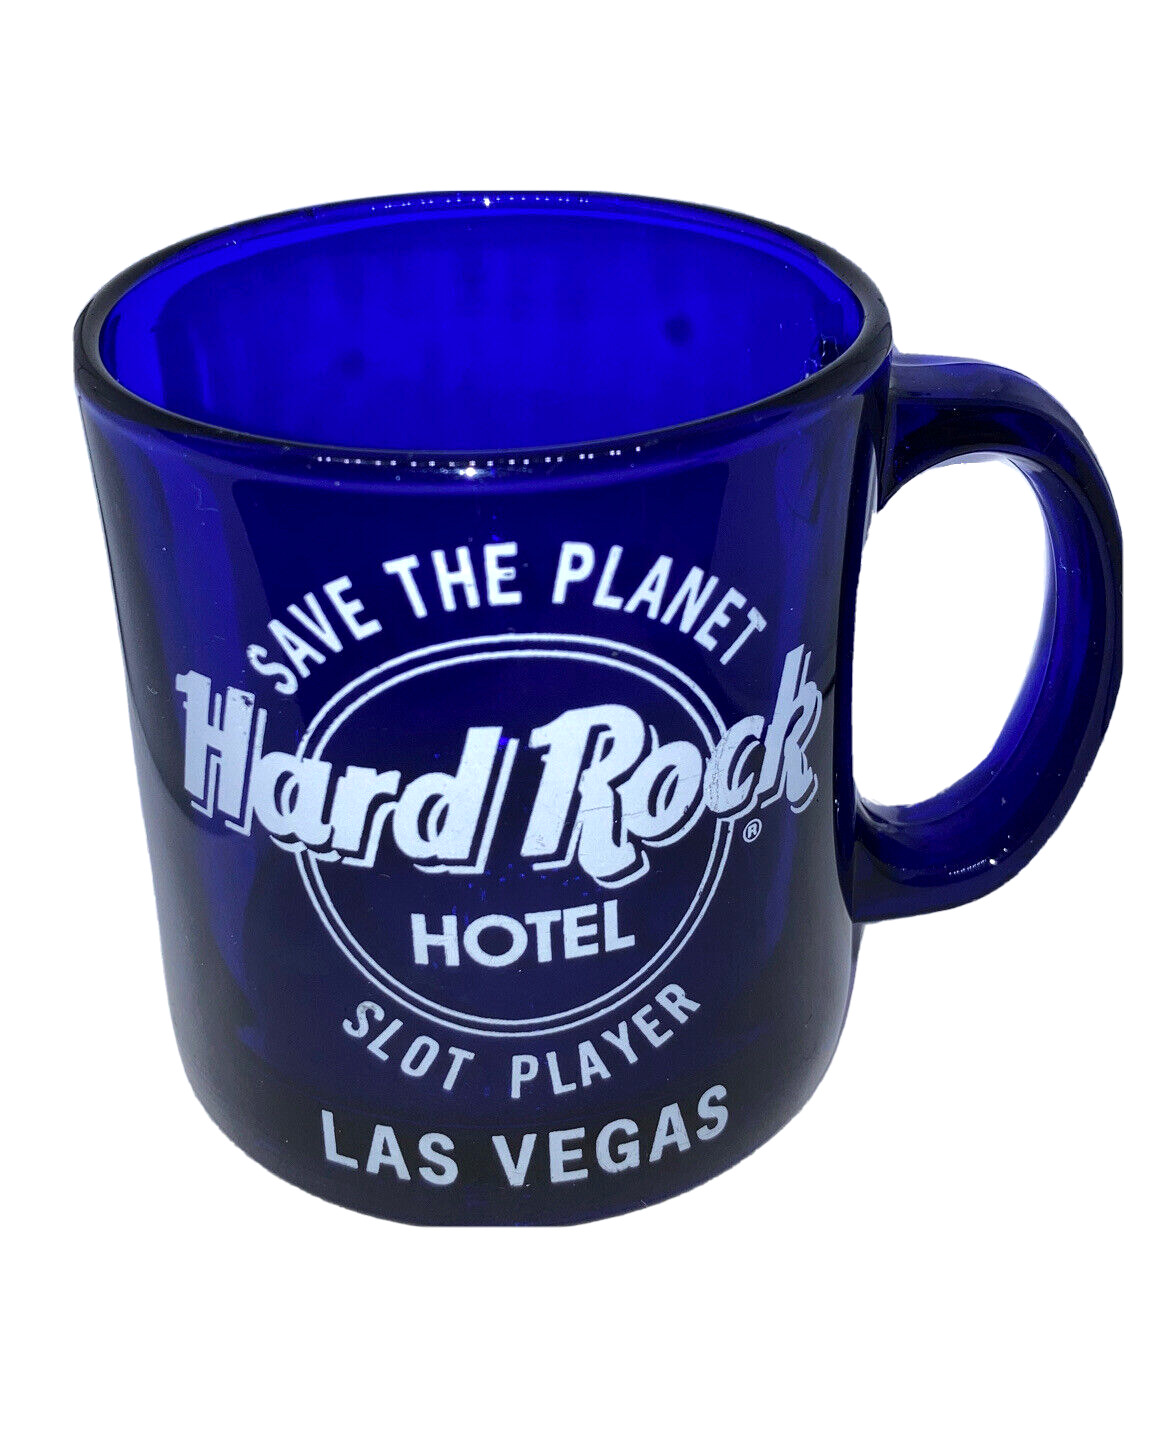 Hard Rock Hotel Las Vegas blue glass mug / cup  Save the Planet - Slot Player